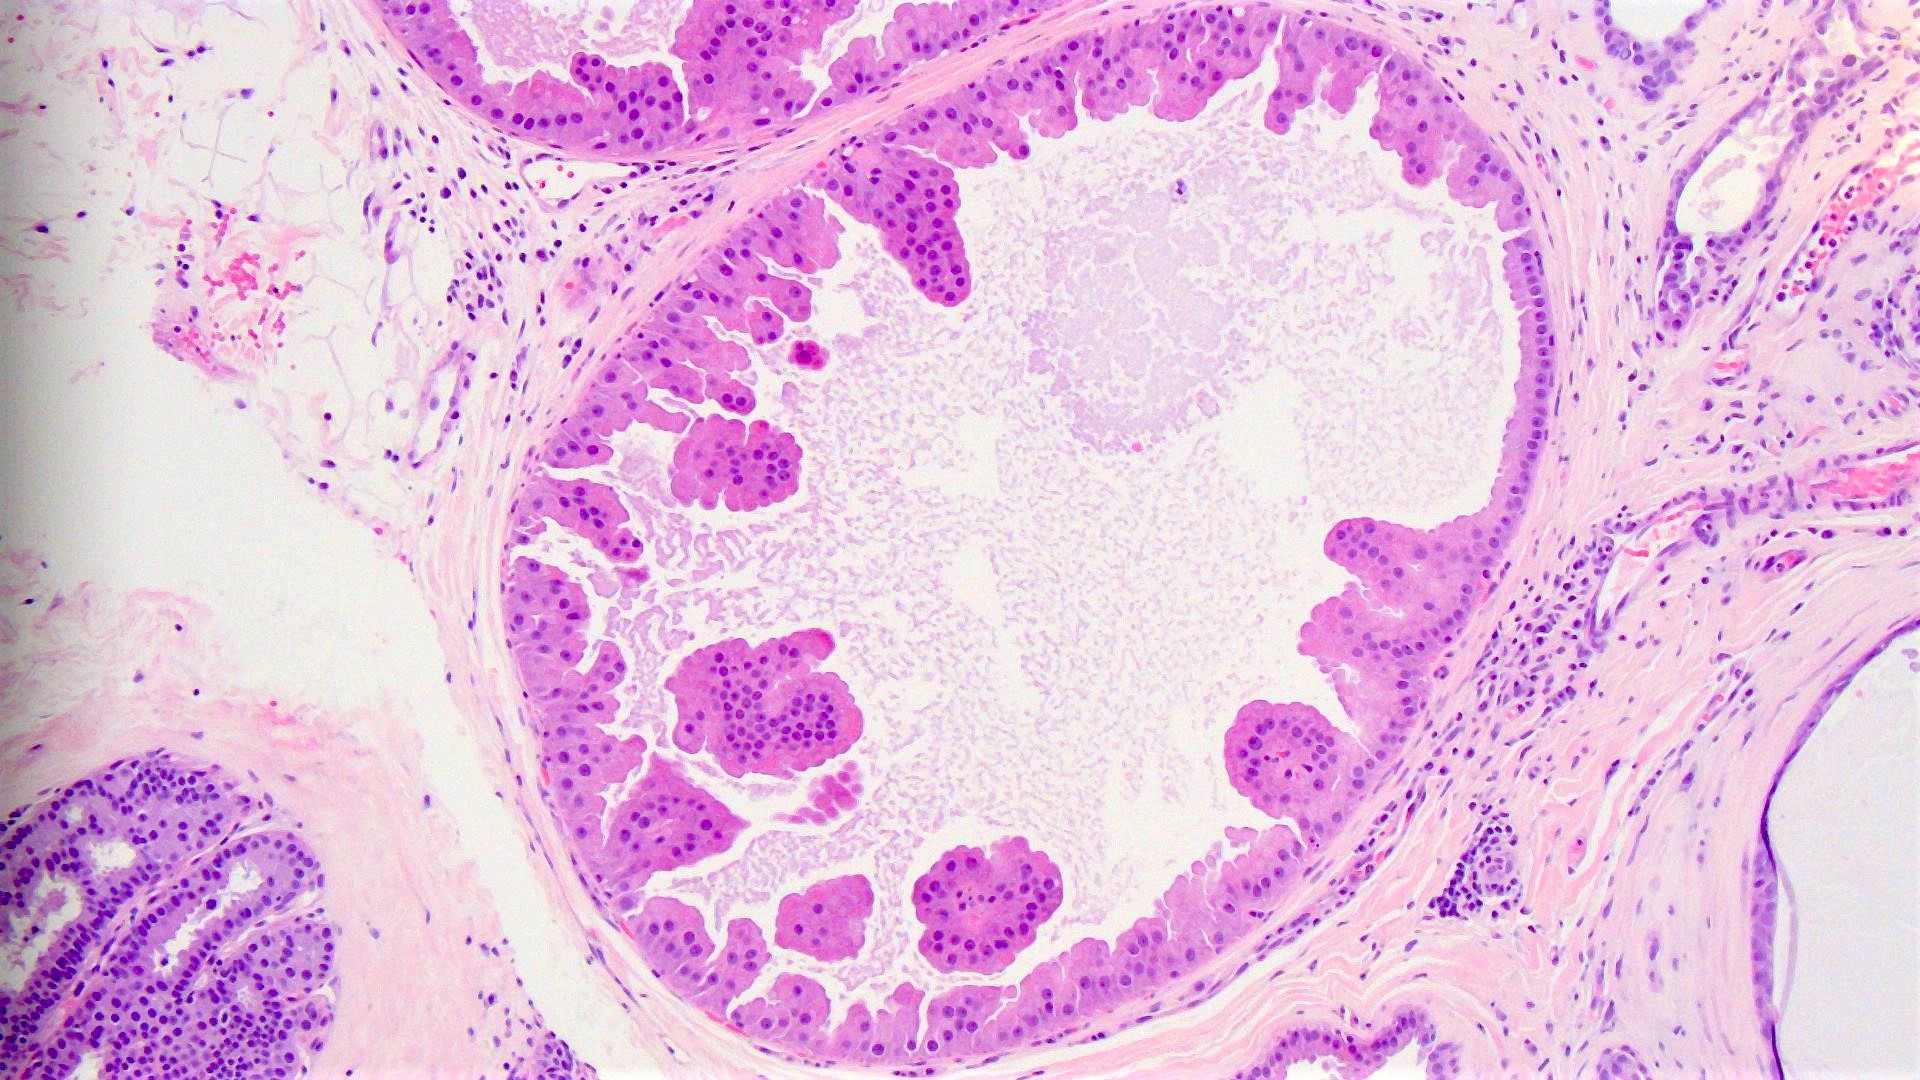 intraductal papilloma with extensive apocrine metaplasia